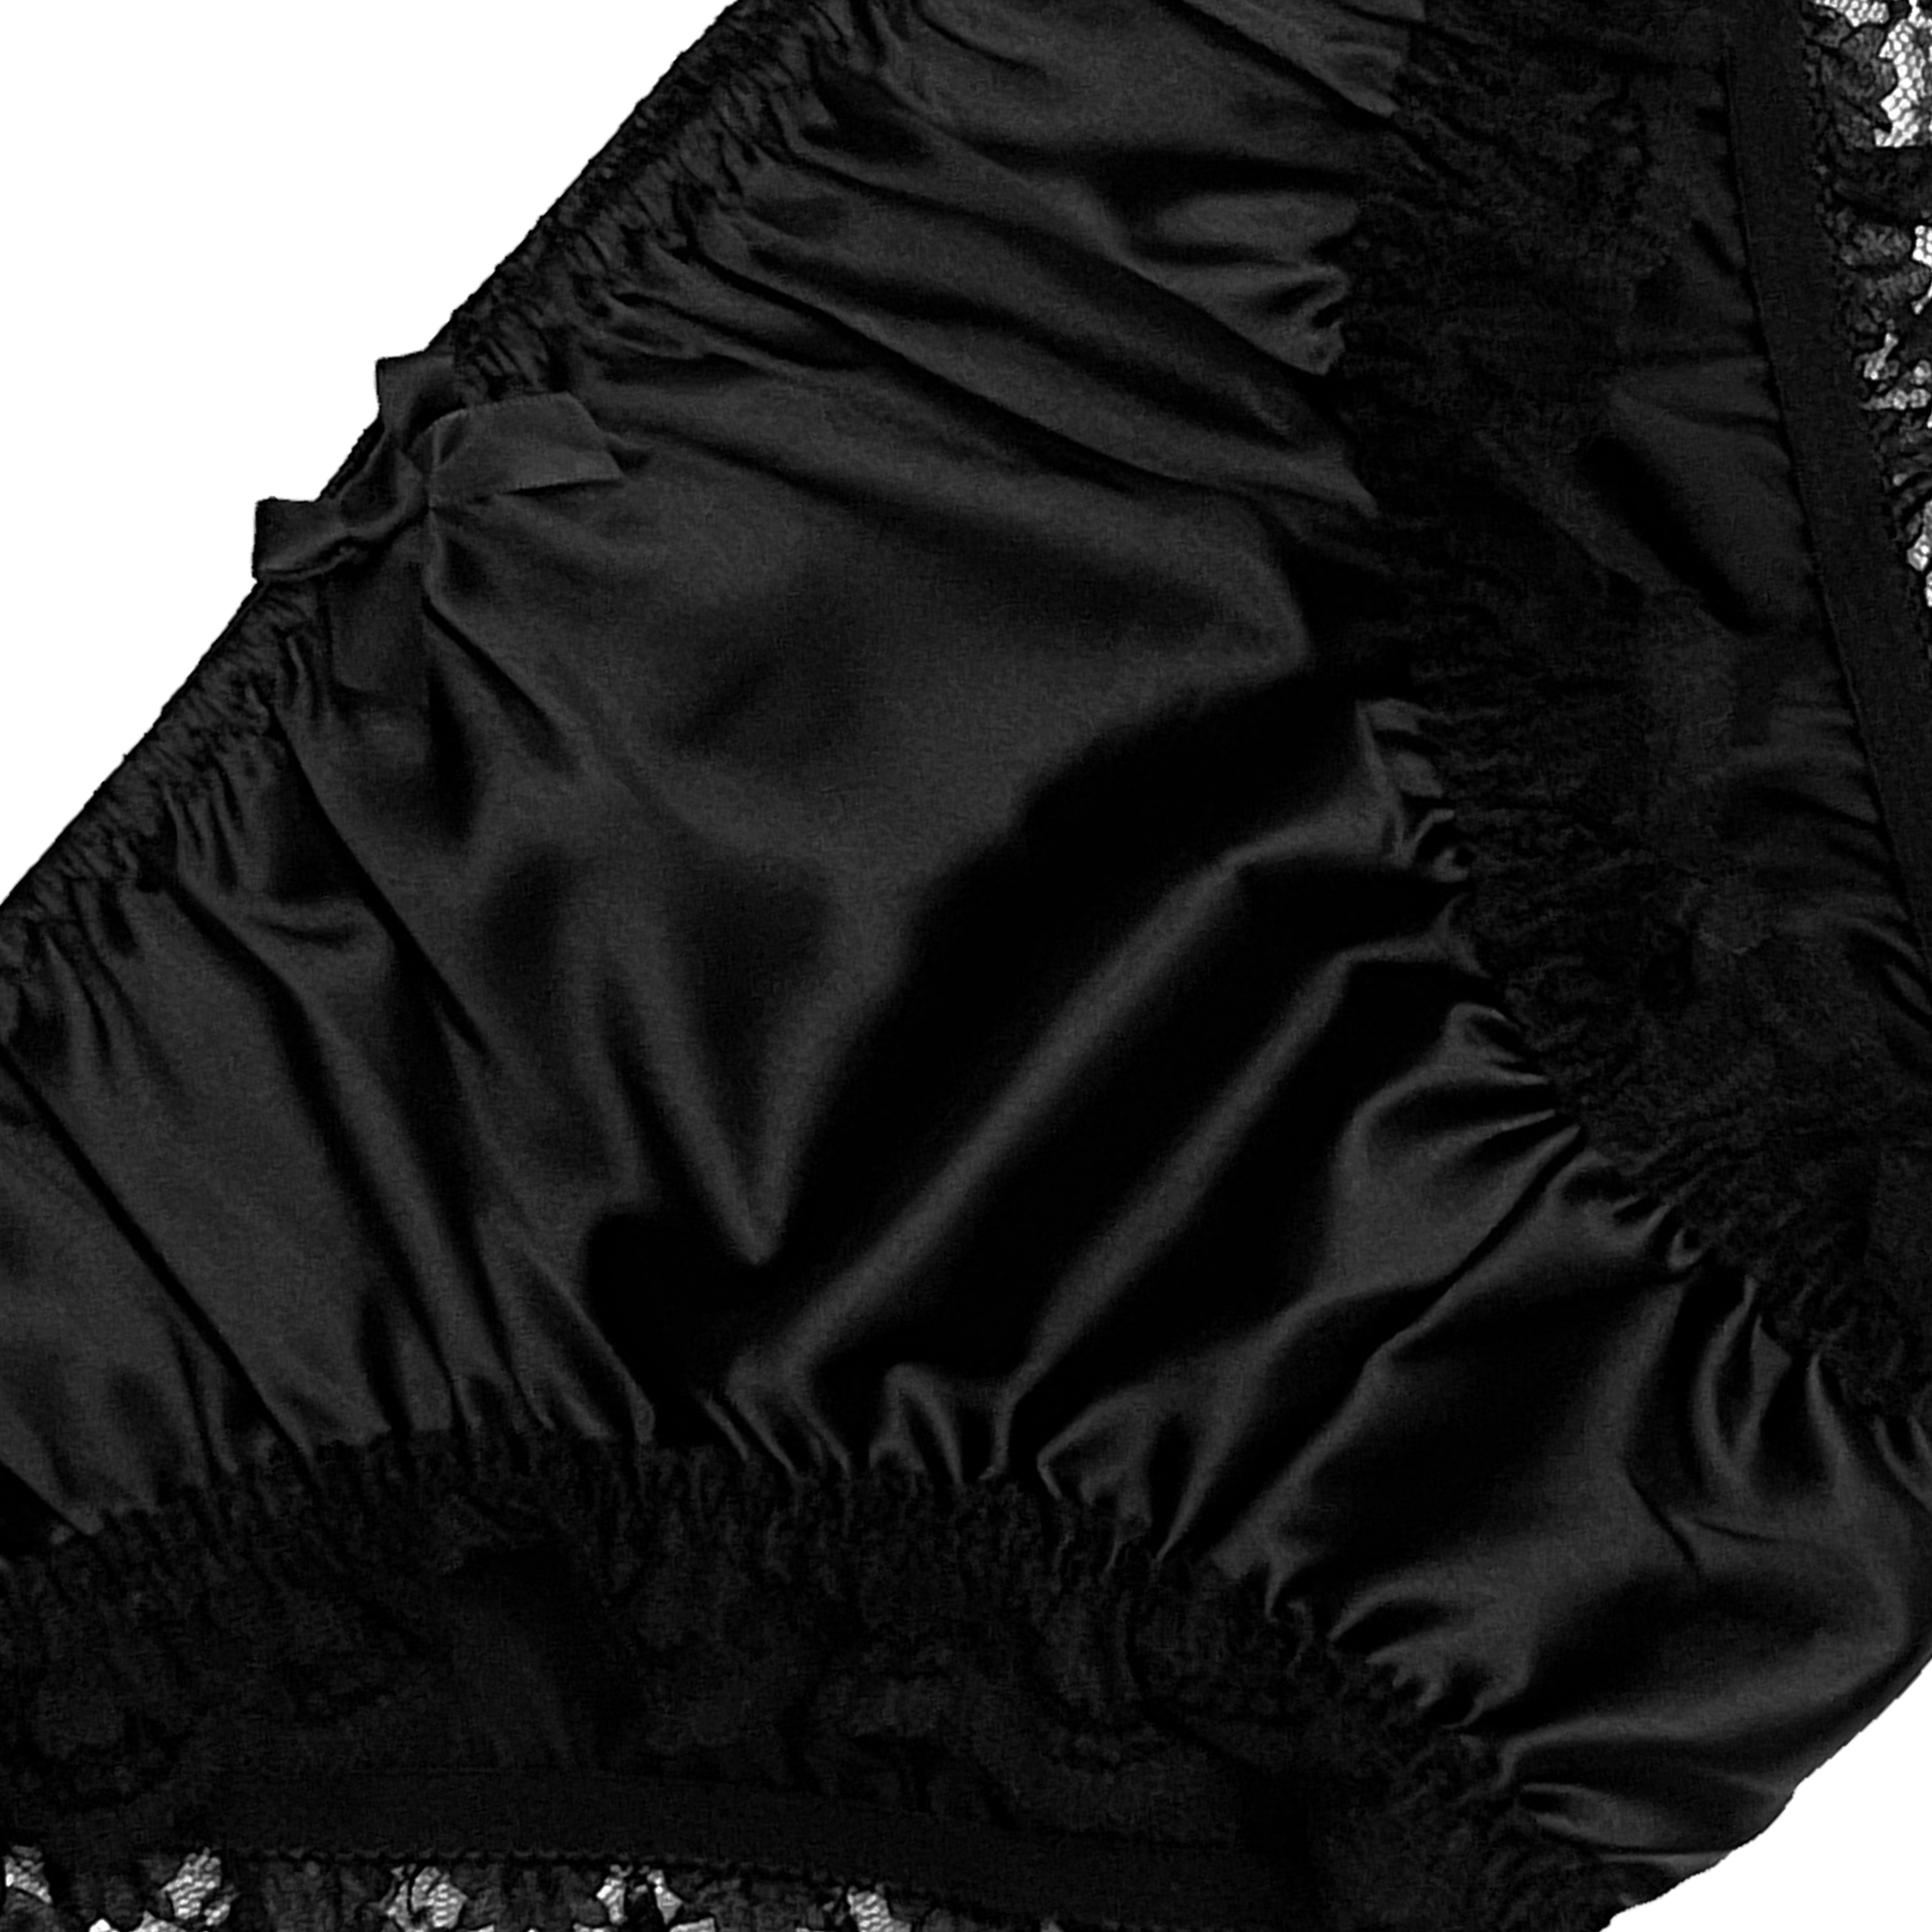 Satin Lace Frilly Sissy Cdtv Full Panties Knicker Briefs Underwear Size S Xxl Ebay 5713